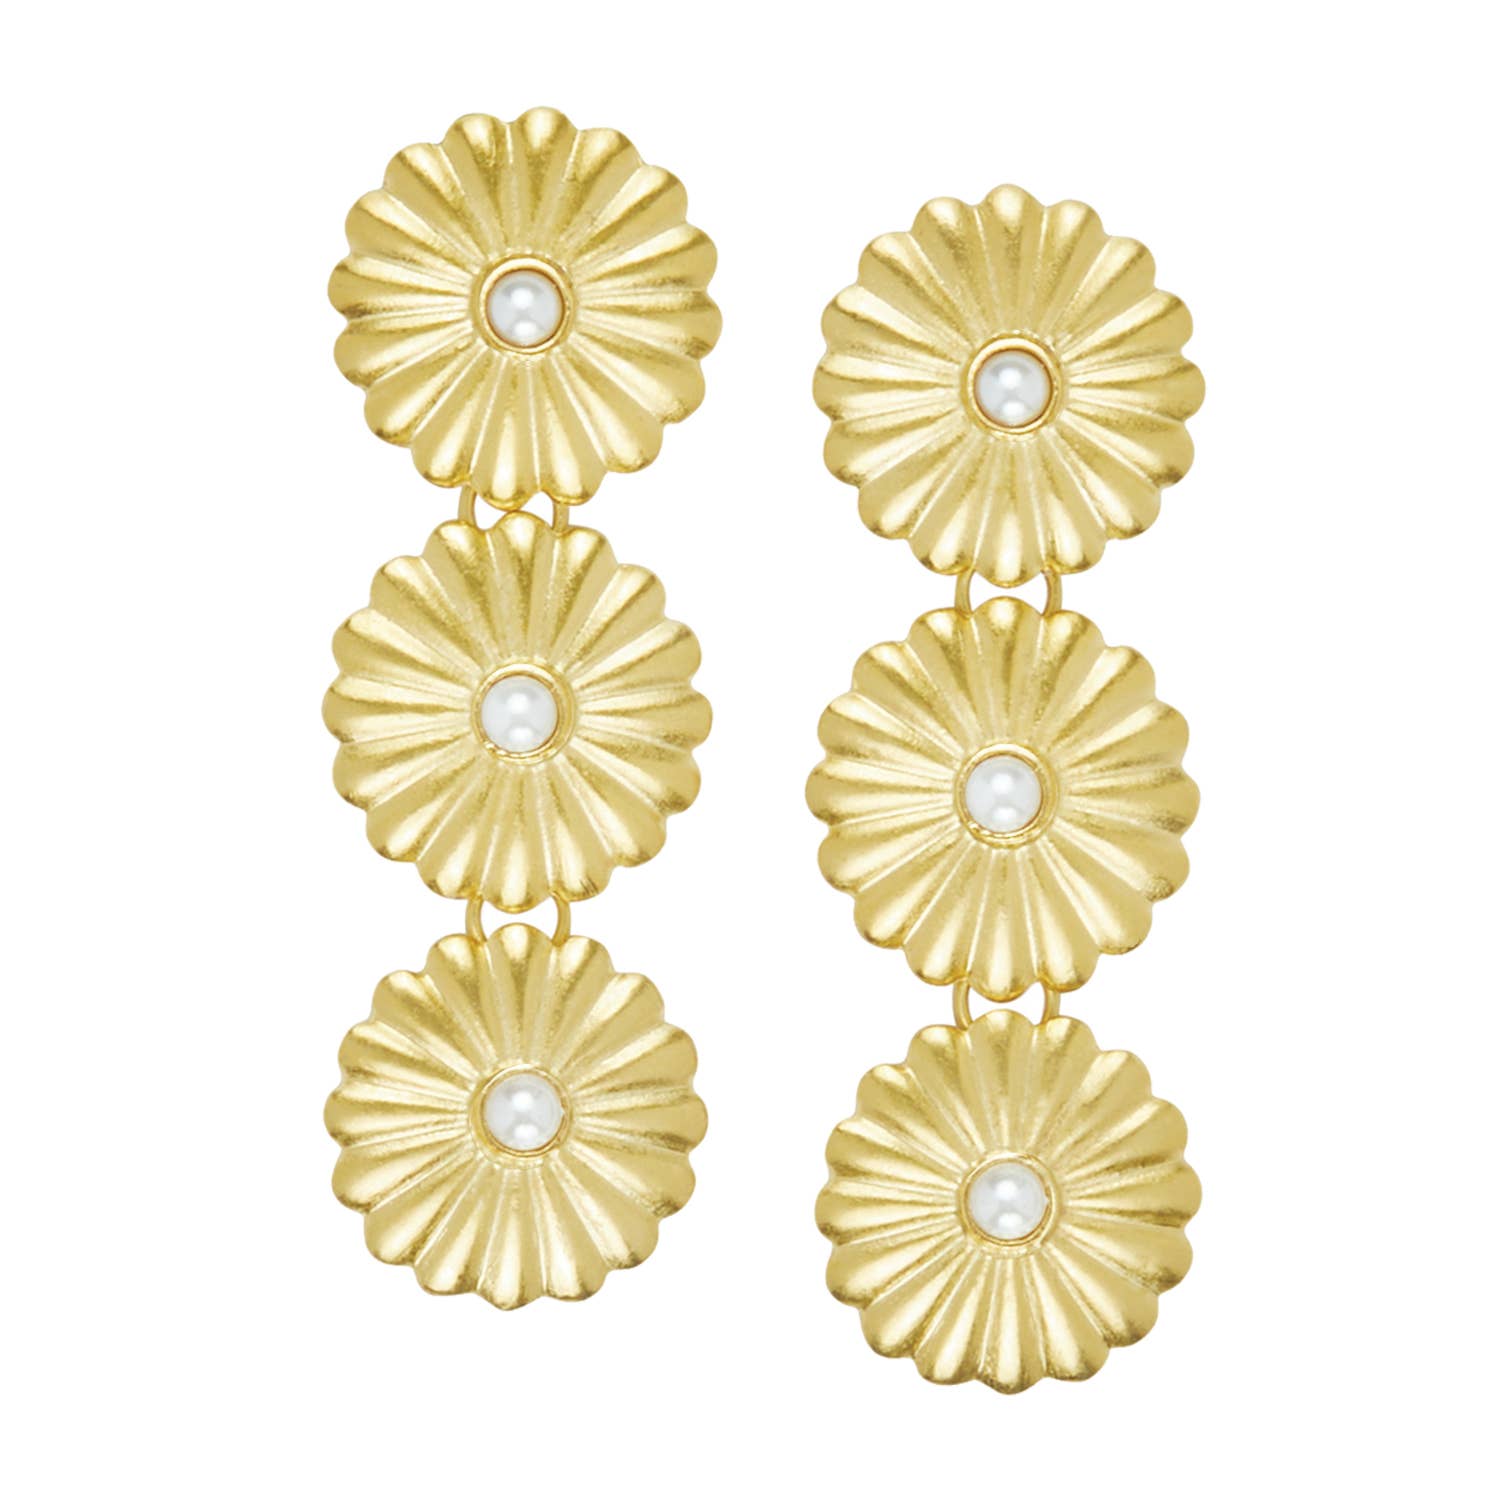 Lote De 20 De Cobre Metal Perlas Flores estilo Bali diseño libre S/H a partir del 1 1 